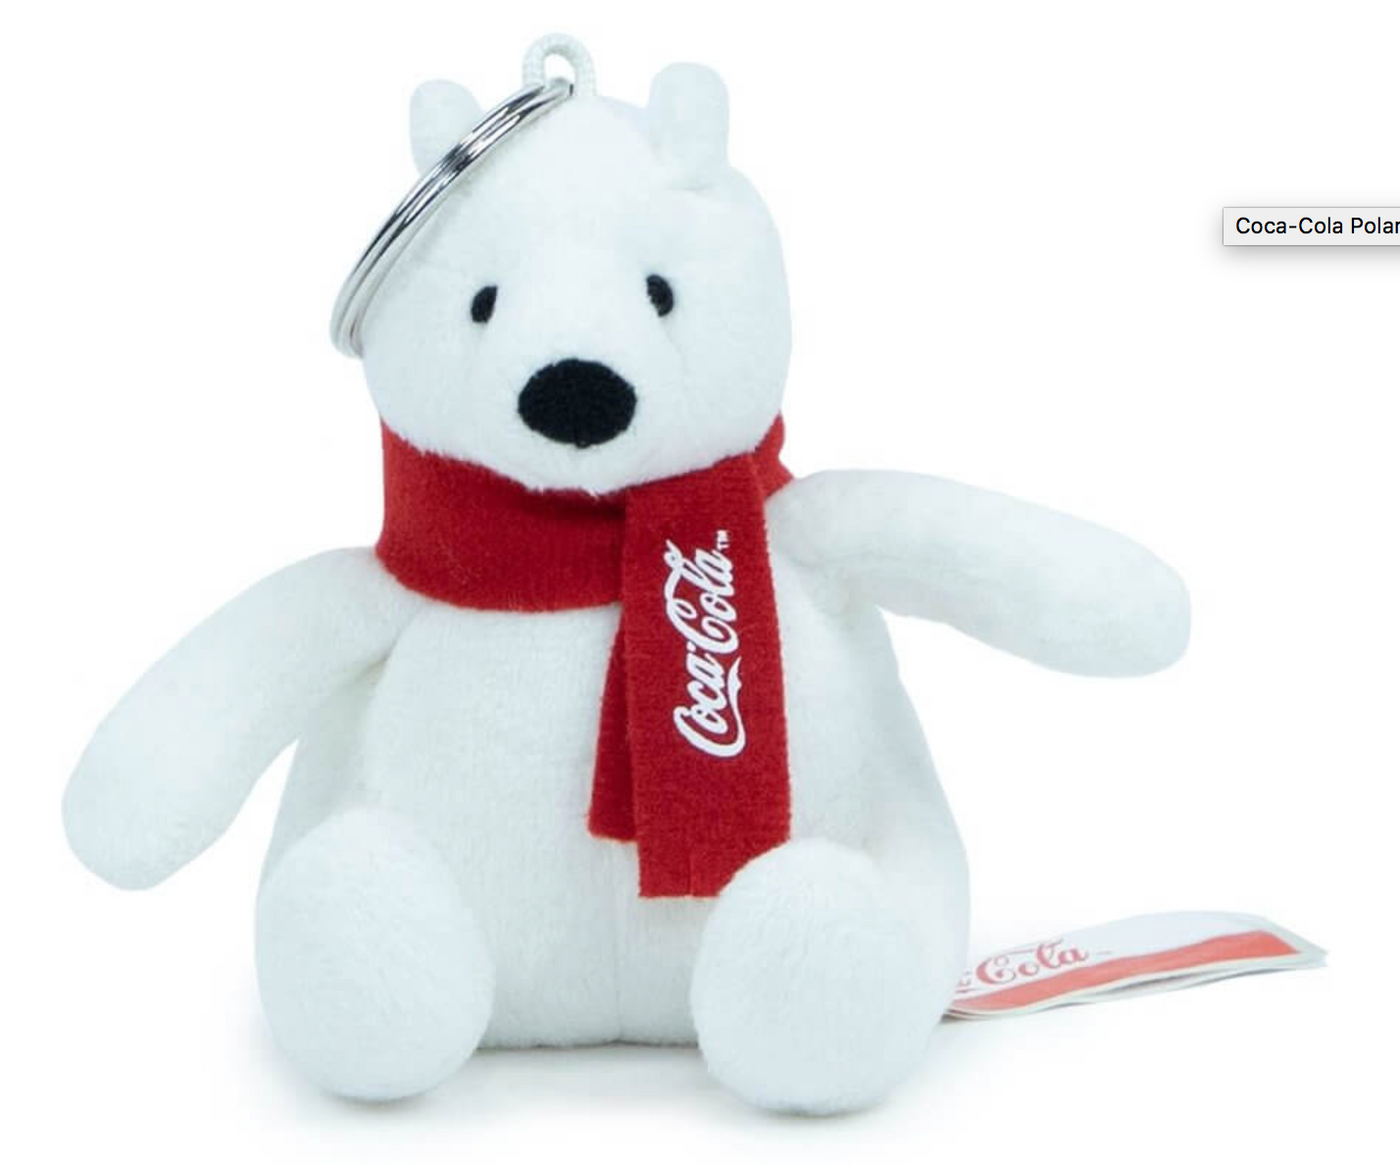 Authentic Coca-Cola Coke Polar Bear Plush Keychain New with Tag